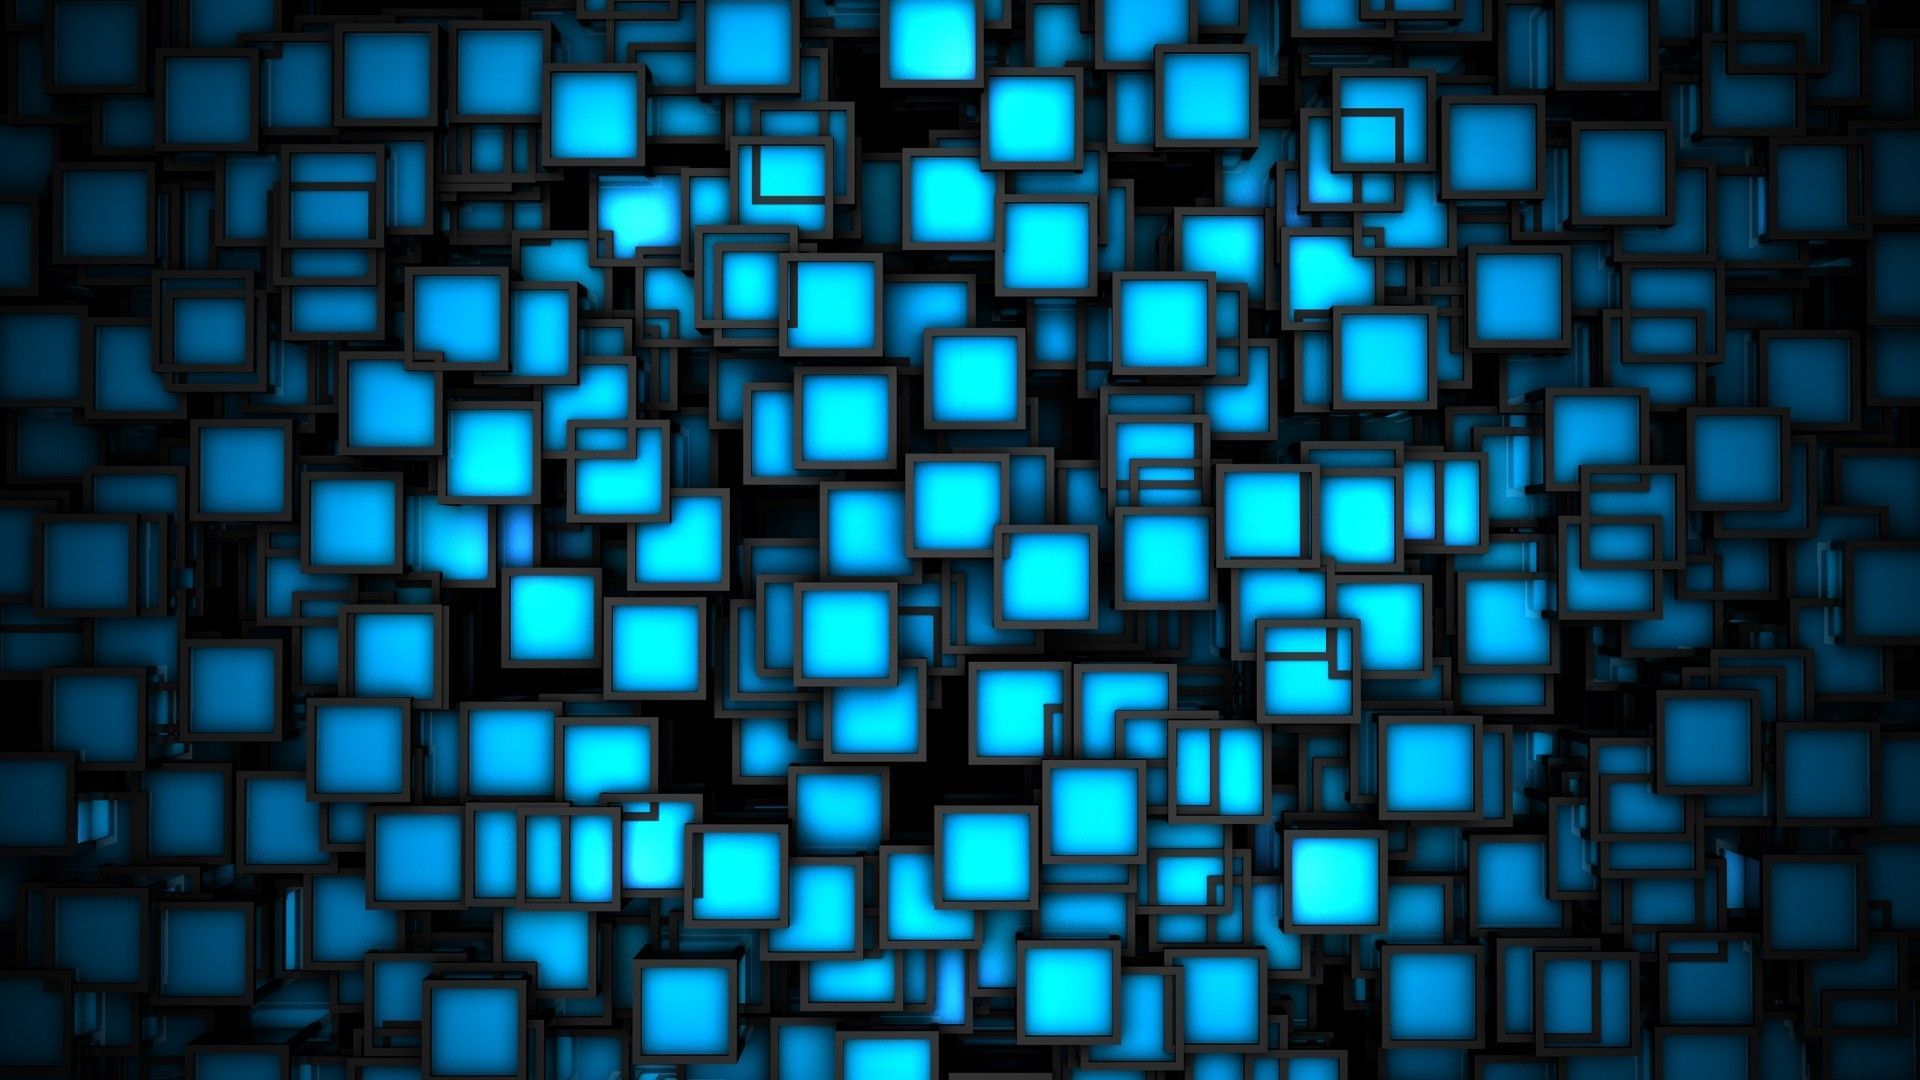 Download Wallpaper 1920x1080 Black, Blue, Bright, Squares Full HD